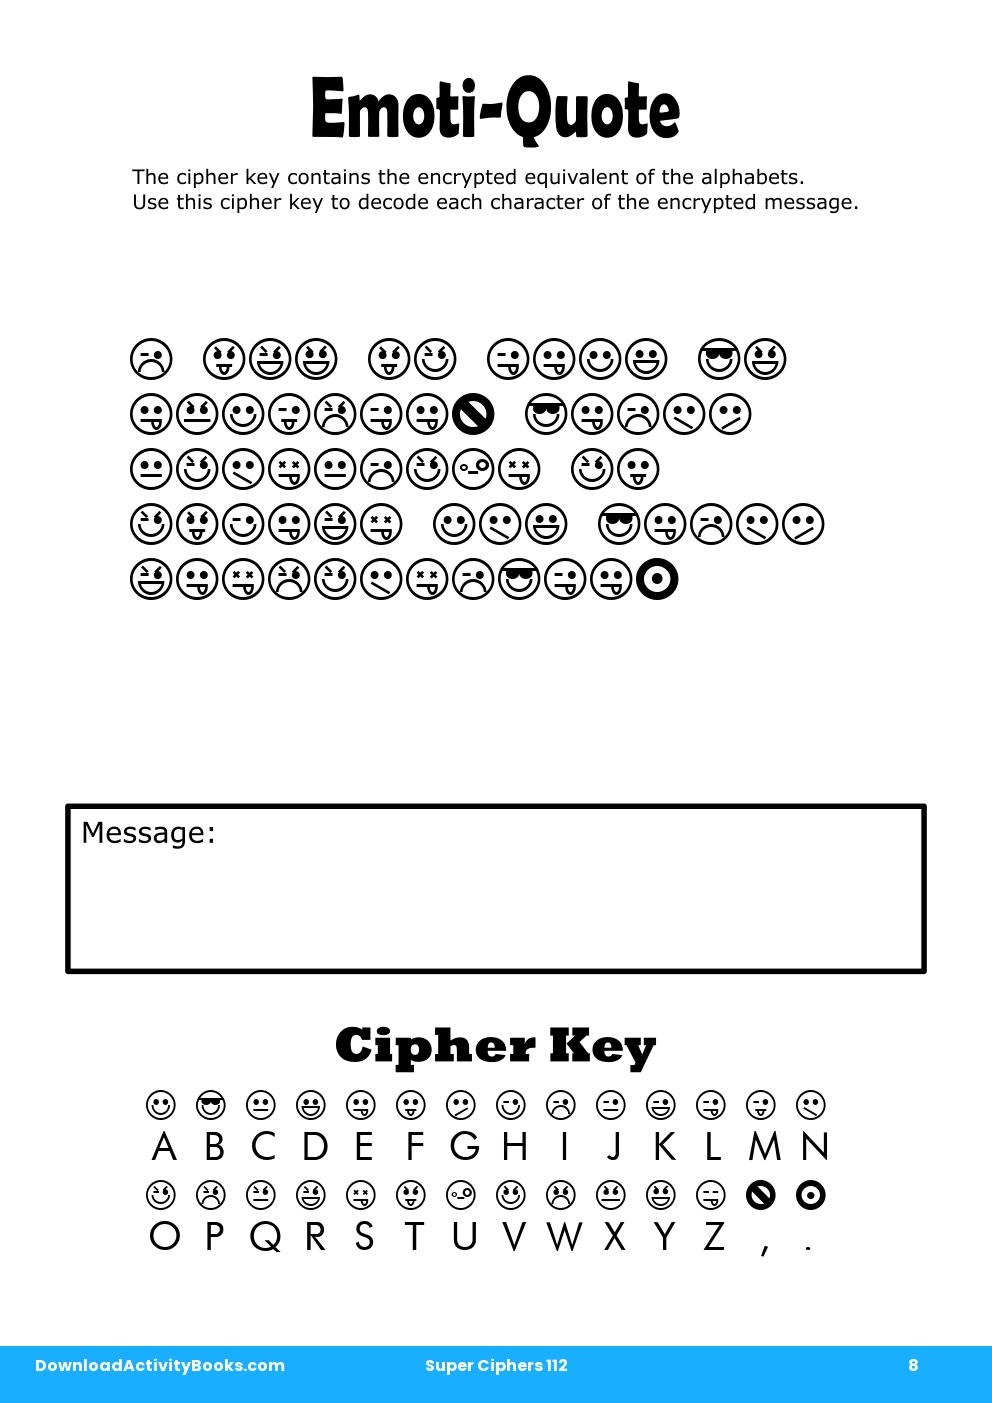 Emoti-Quote in Super Ciphers 112